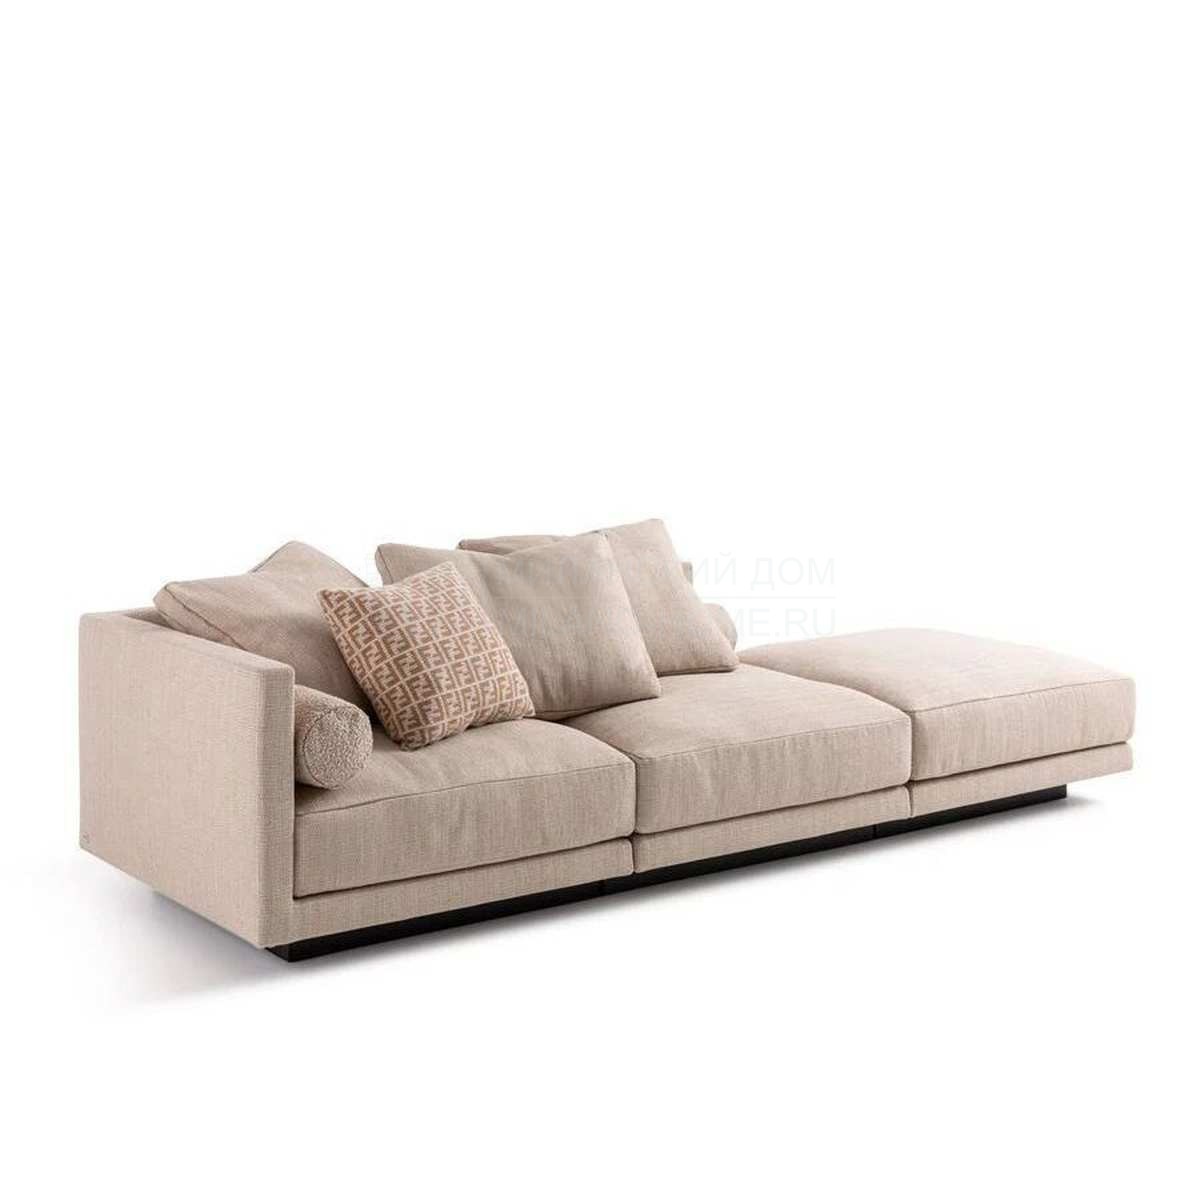 Прямой диван Taiko sofa из Италии фабрики FENDI Casa